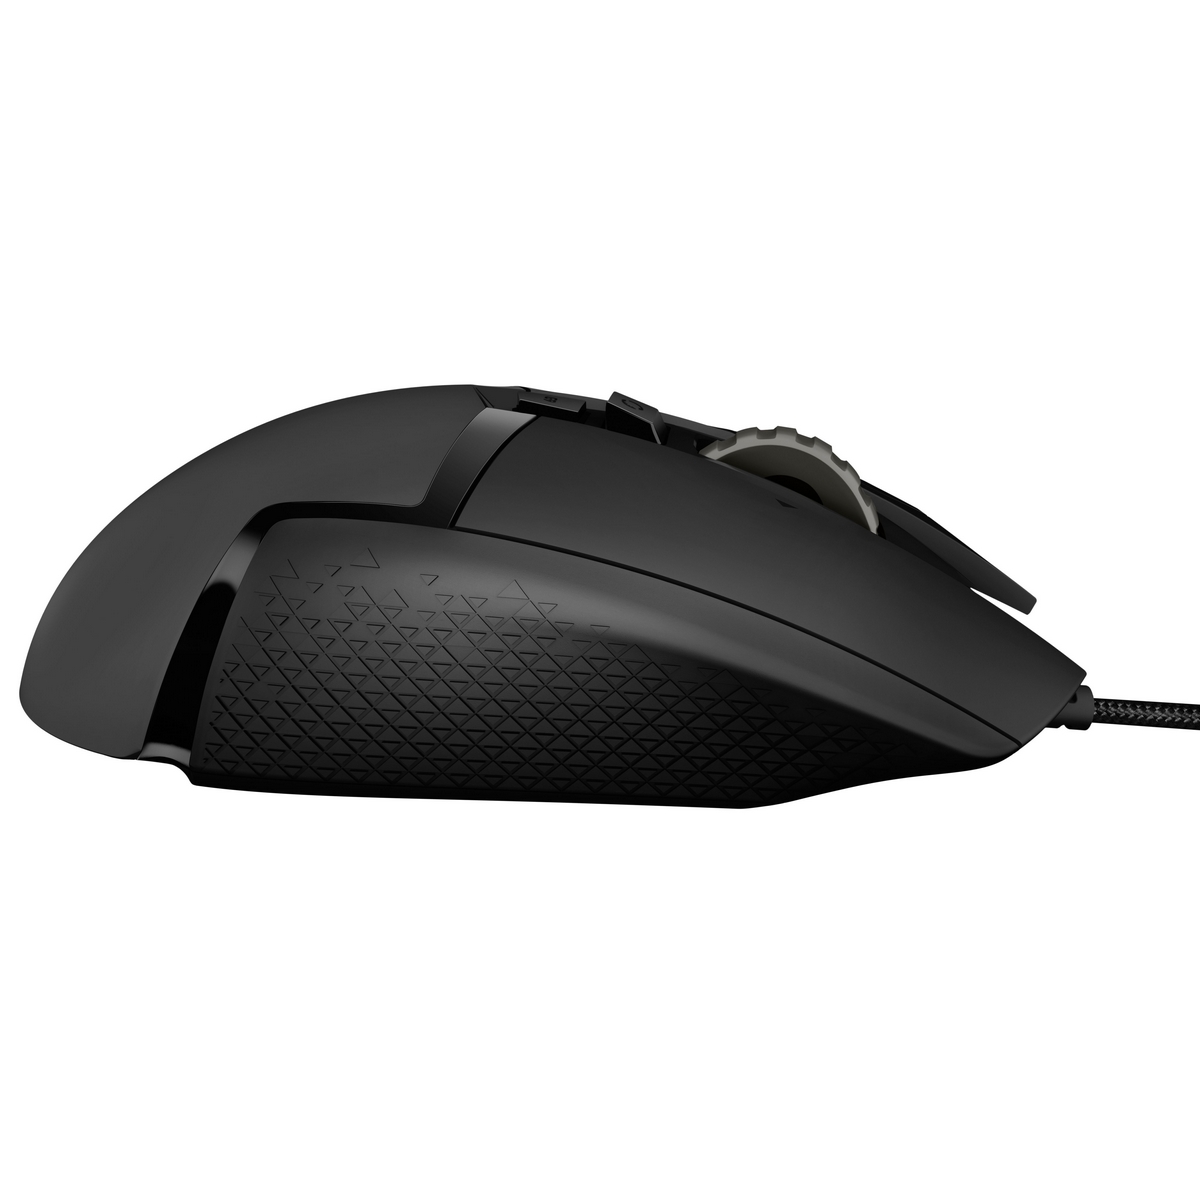 Logitech G502 HERO High Performance Gaming Mouse (910-005471)